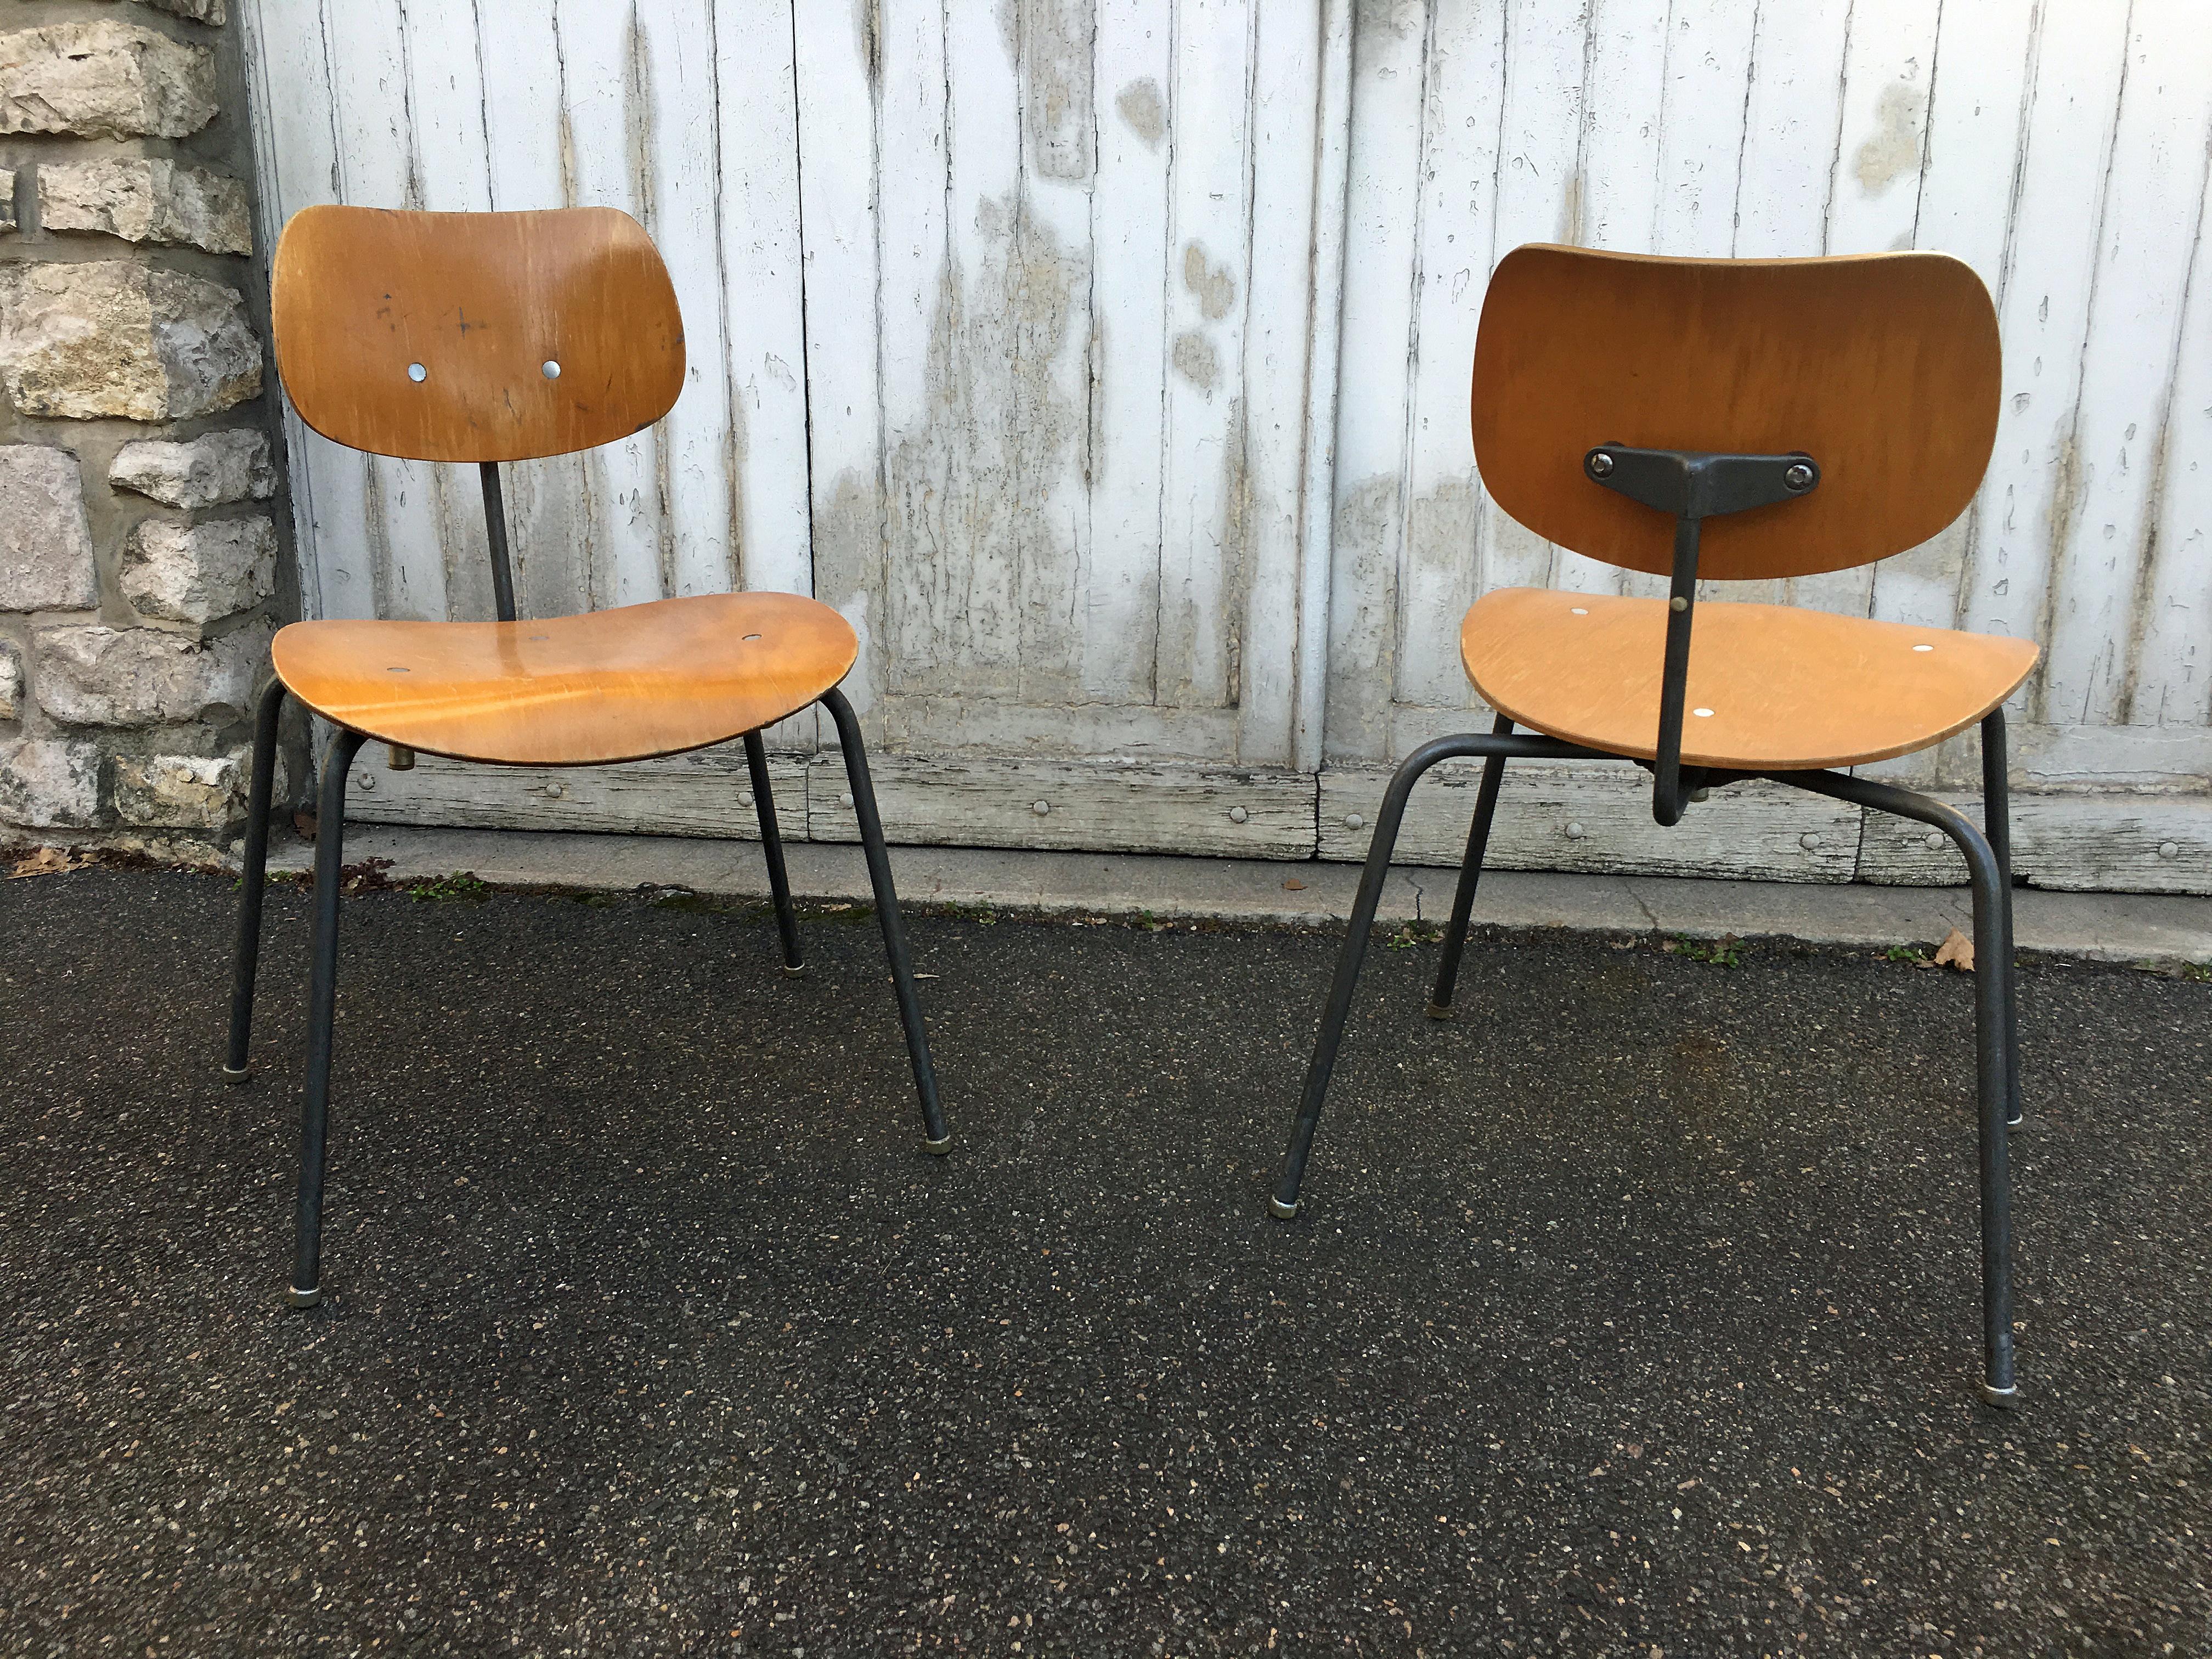 Dining chairs by Egon Eiermann for Wilde & Spieth.